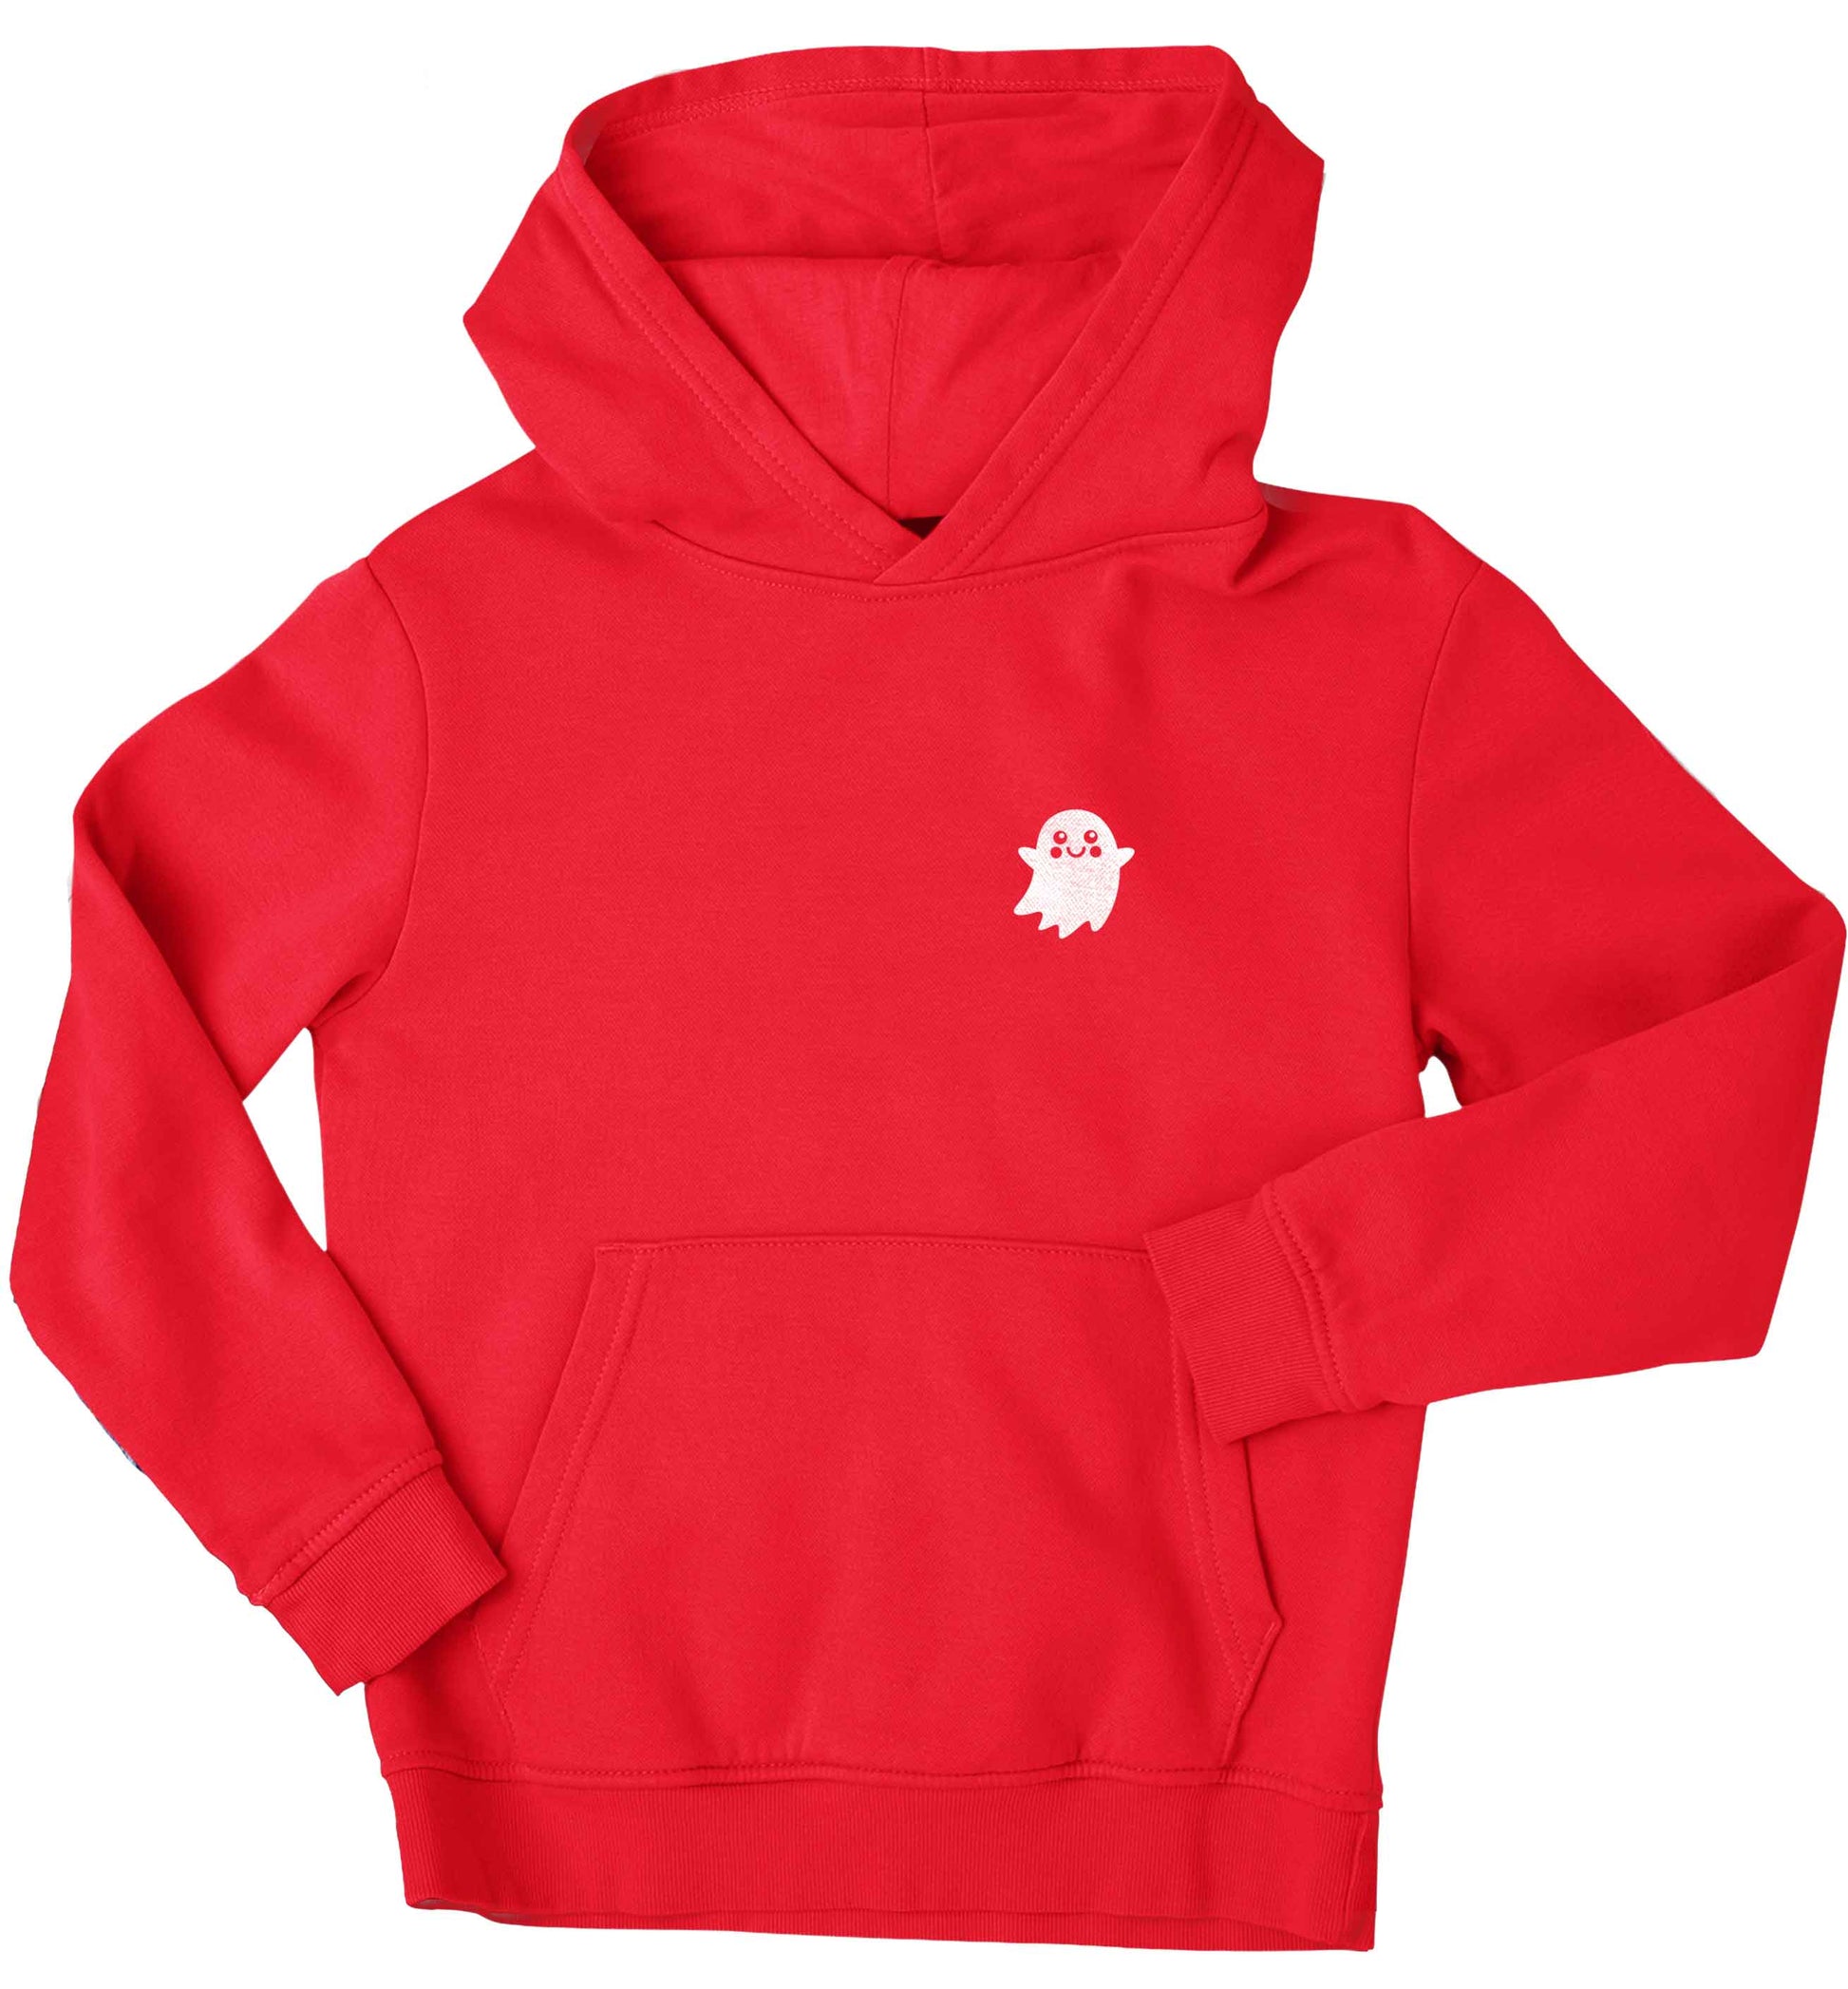 Pocket ghost children's red hoodie 12-13 Years